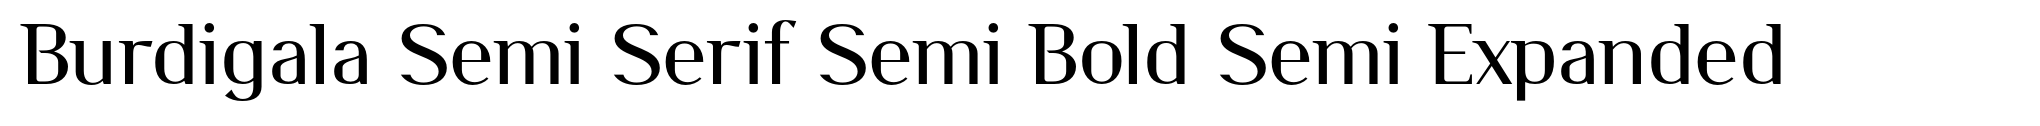 Burdigala Semi Serif Semi Bold Semi Expanded image